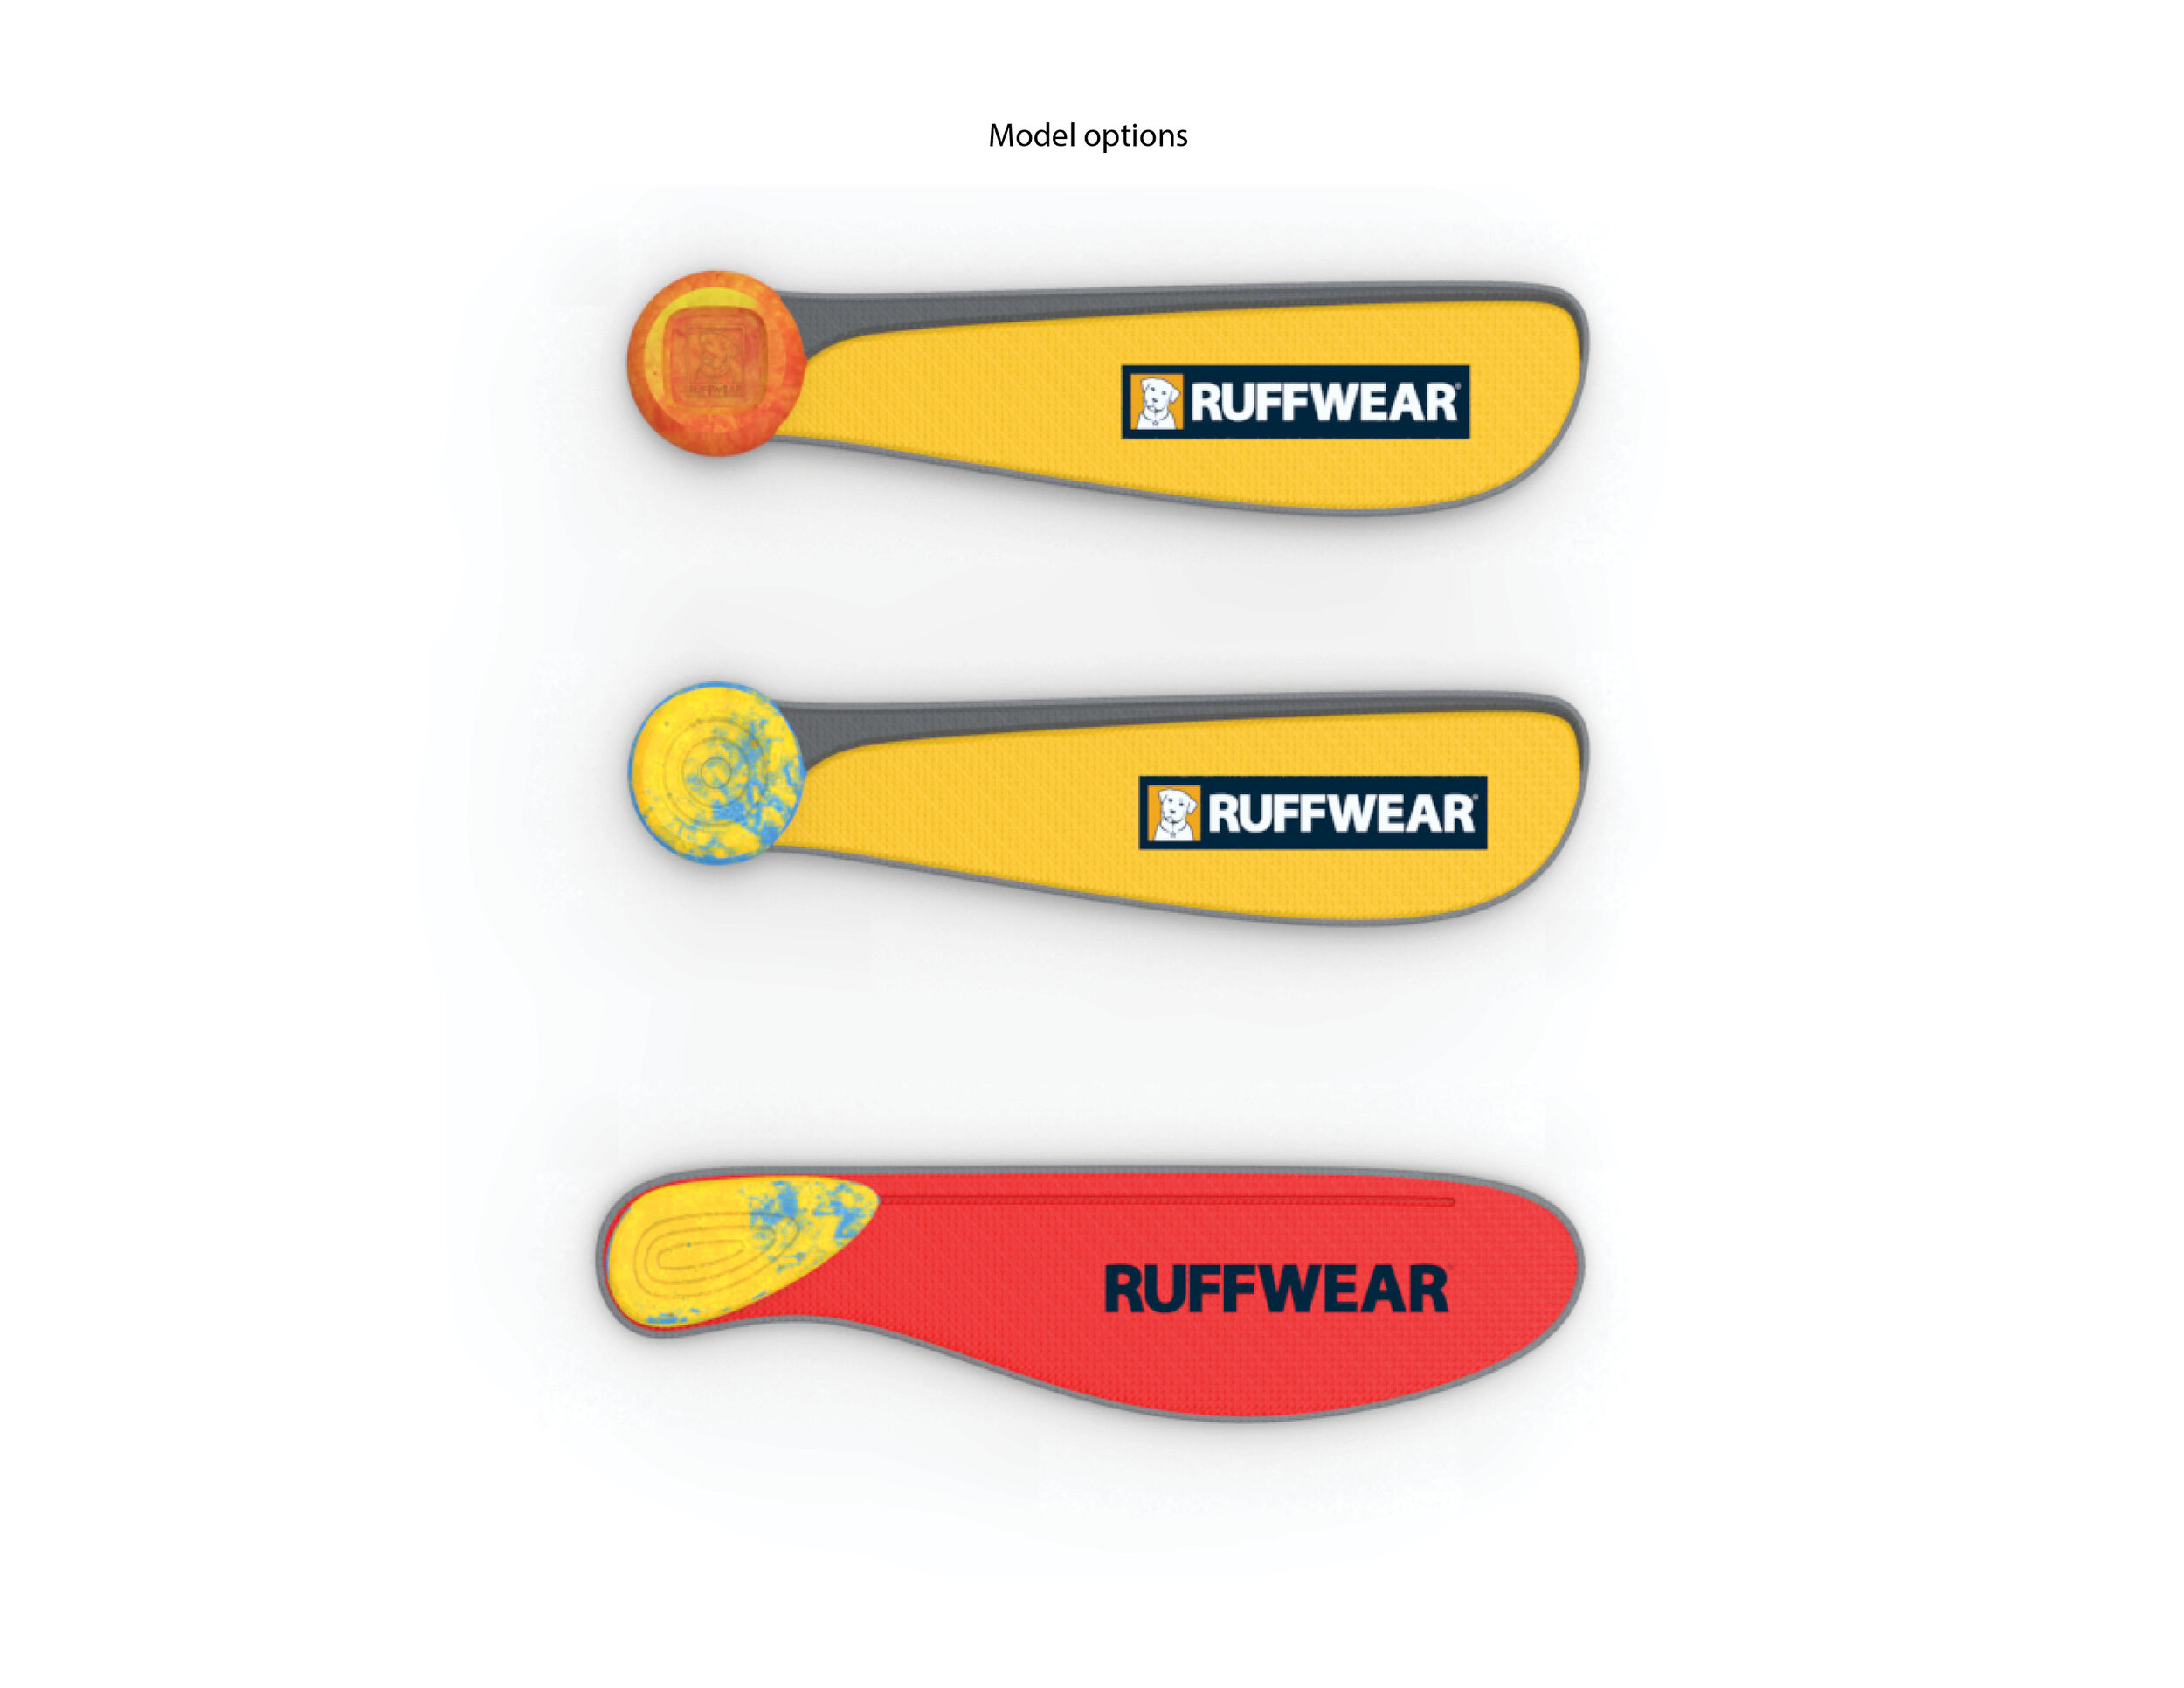 Ruffwear Toy Concepts 07.01.1526.jpg